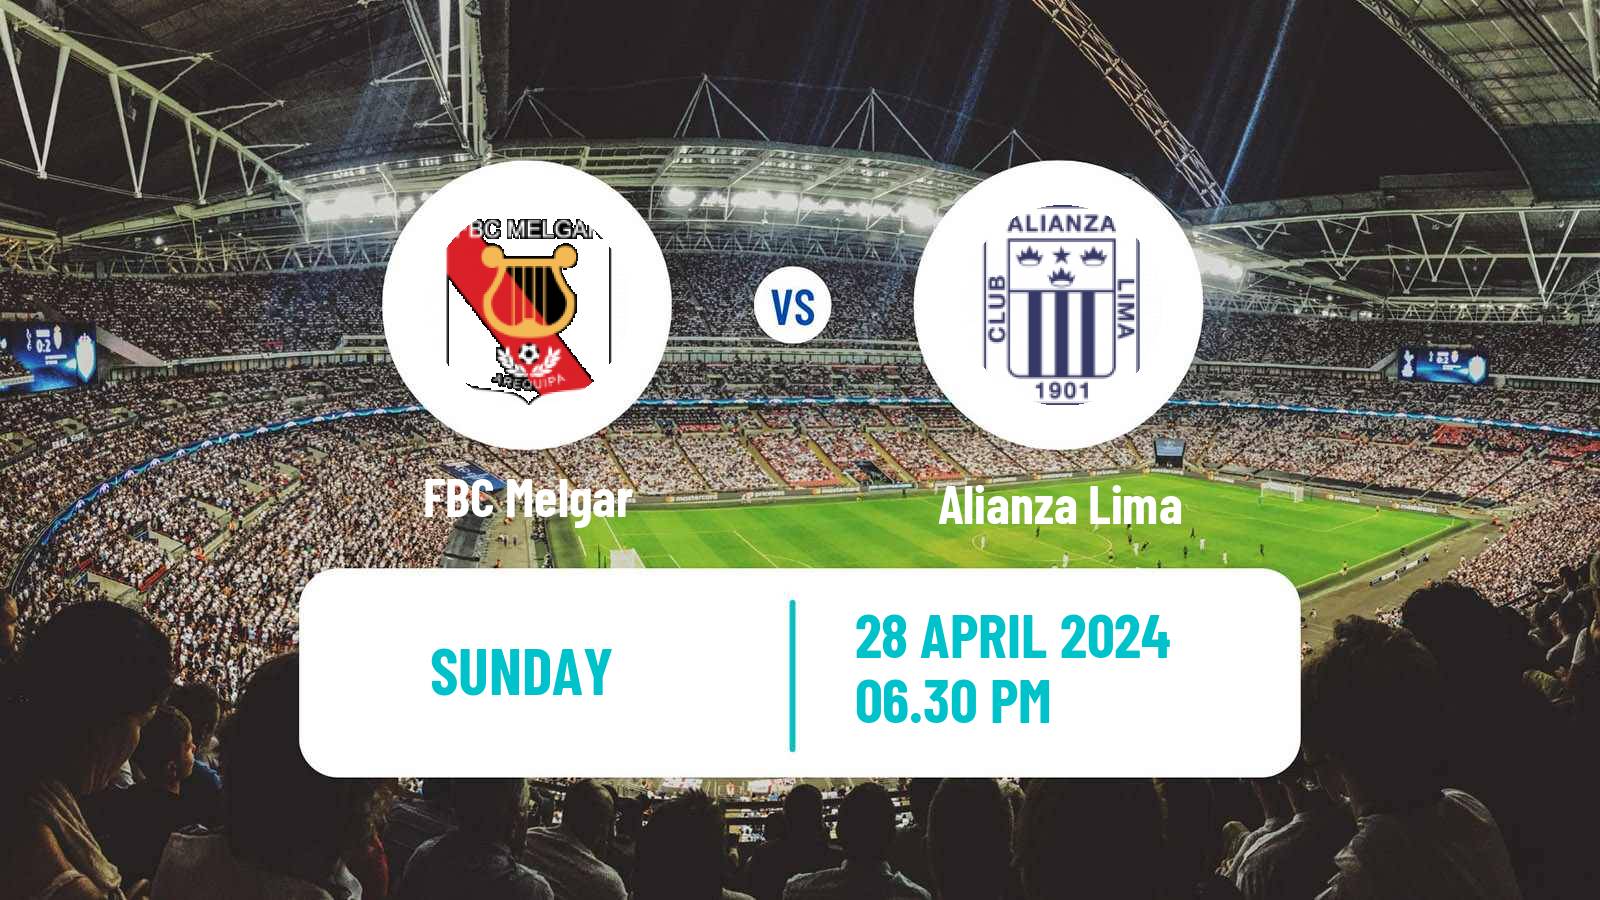 Soccer Peruvian Liga 1 FBC Melgar - Alianza Lima